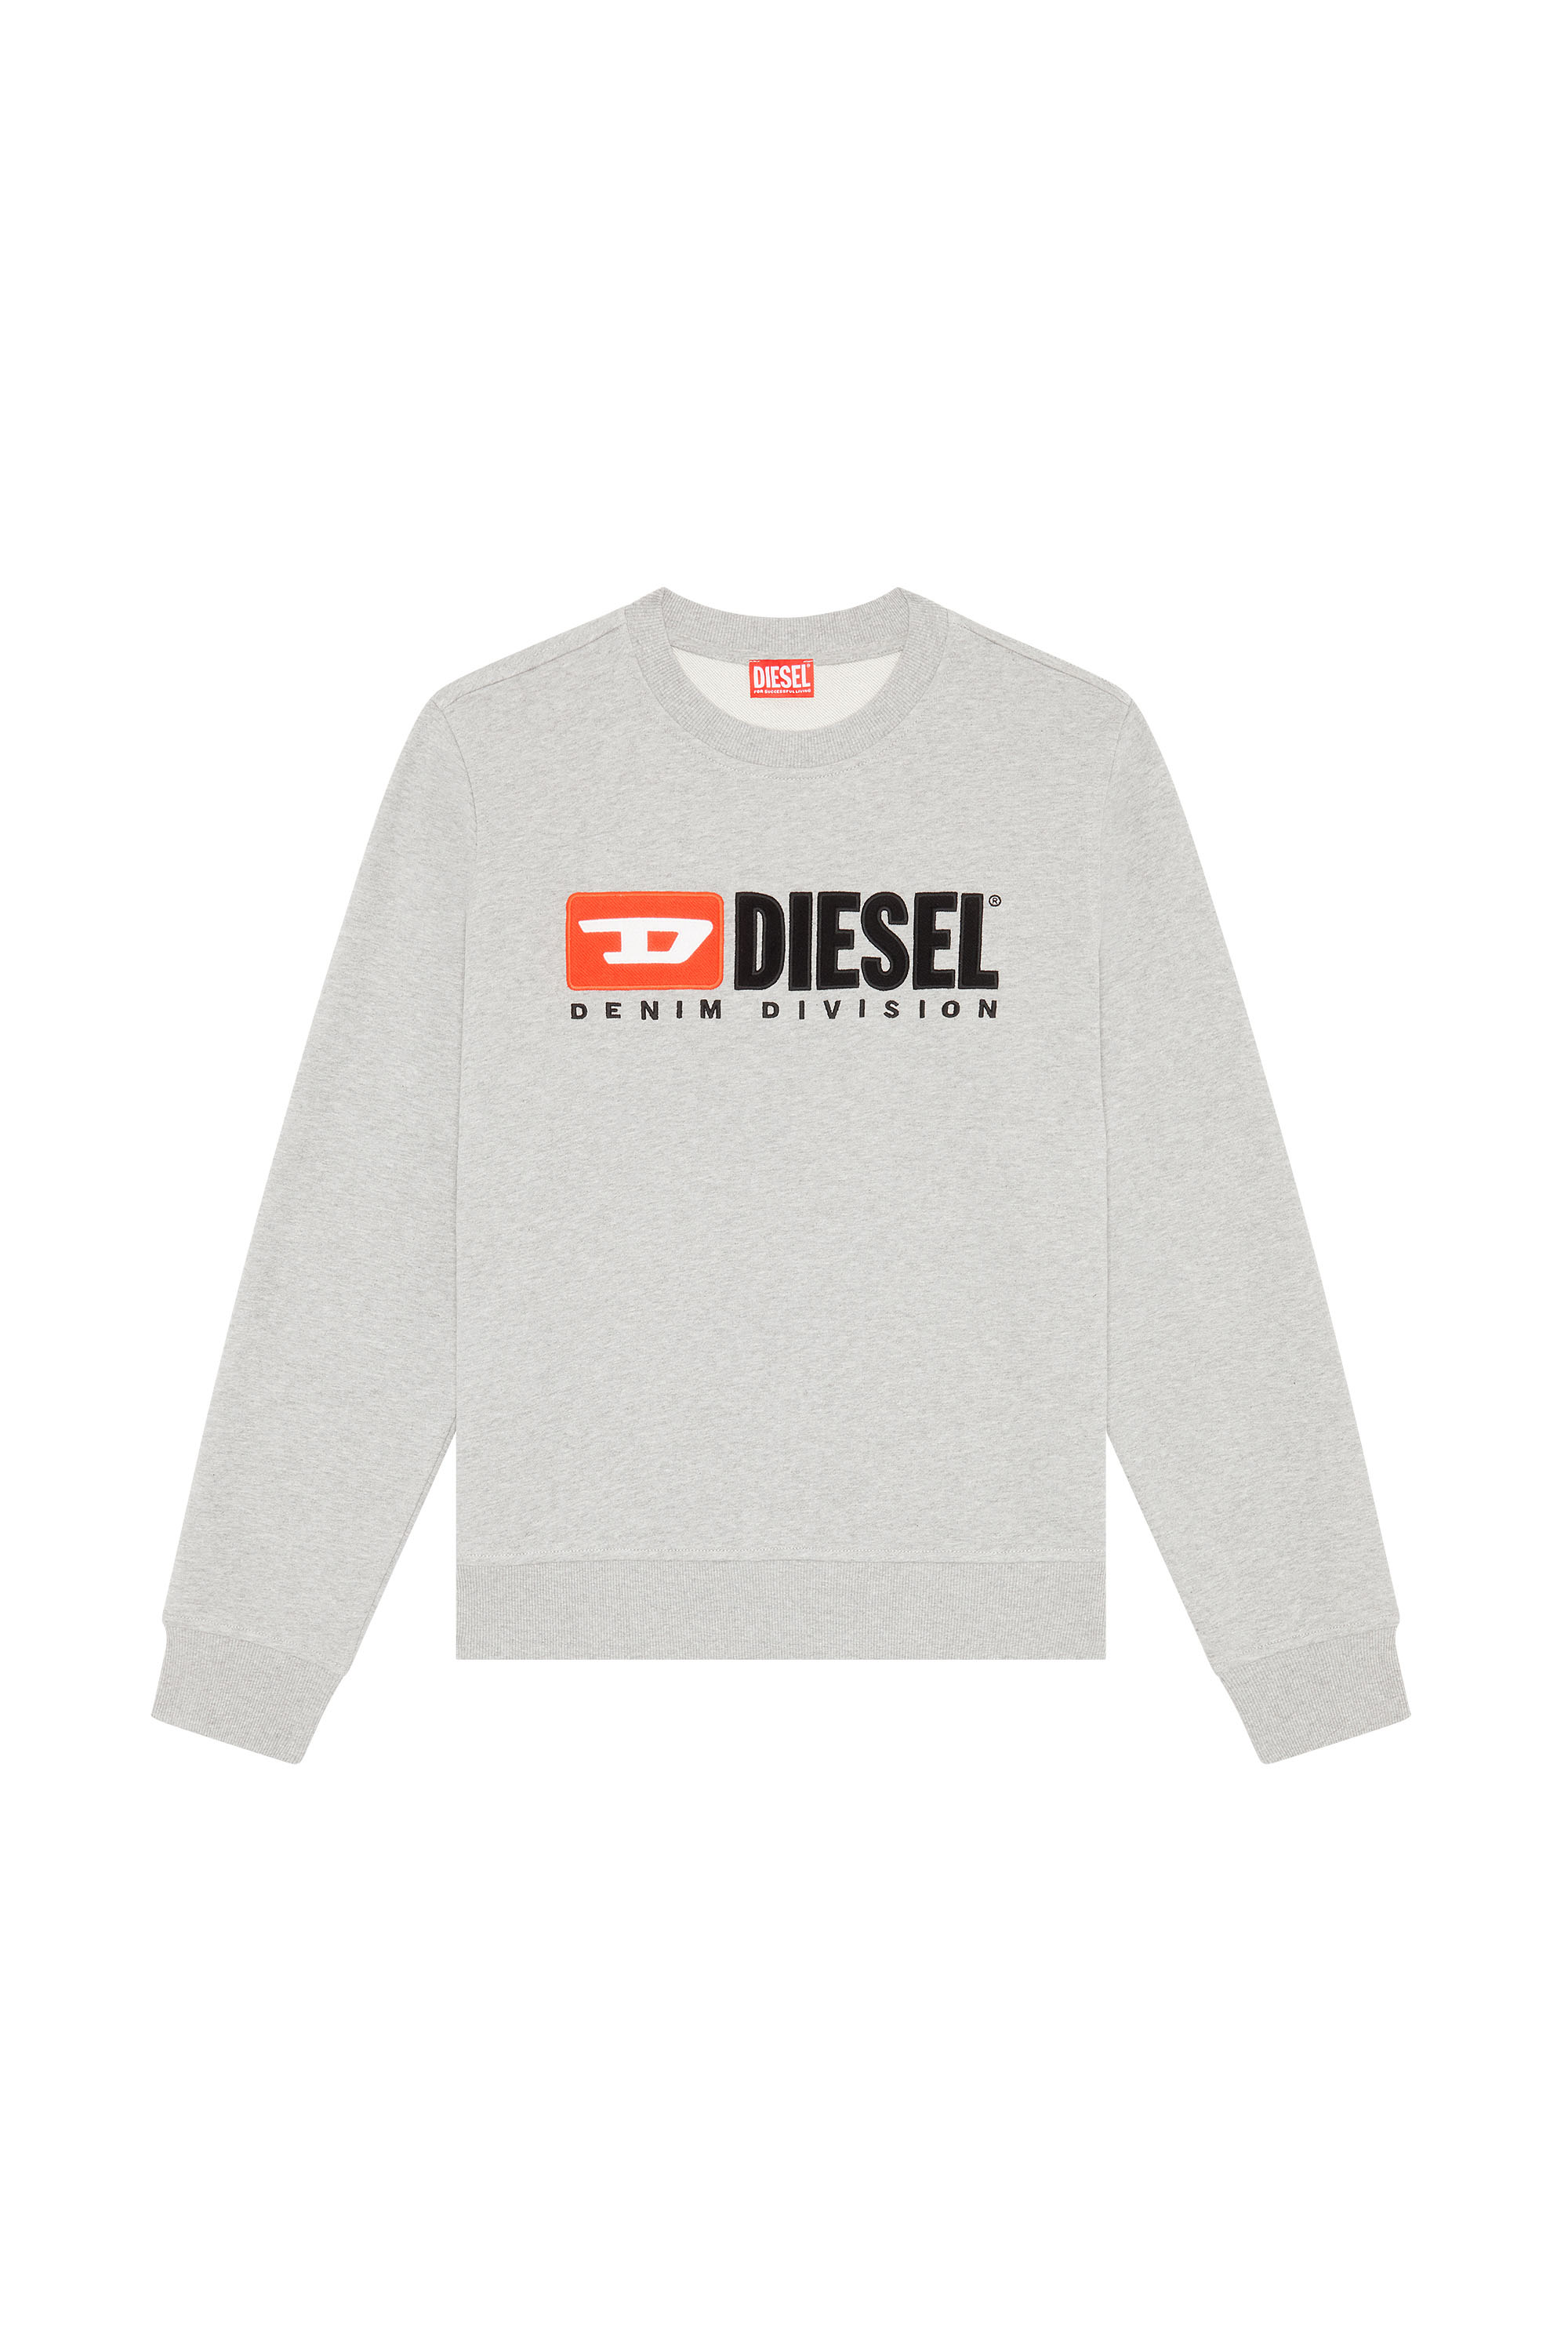 Diesel - S-GINN-DIV, Grey - Image 3